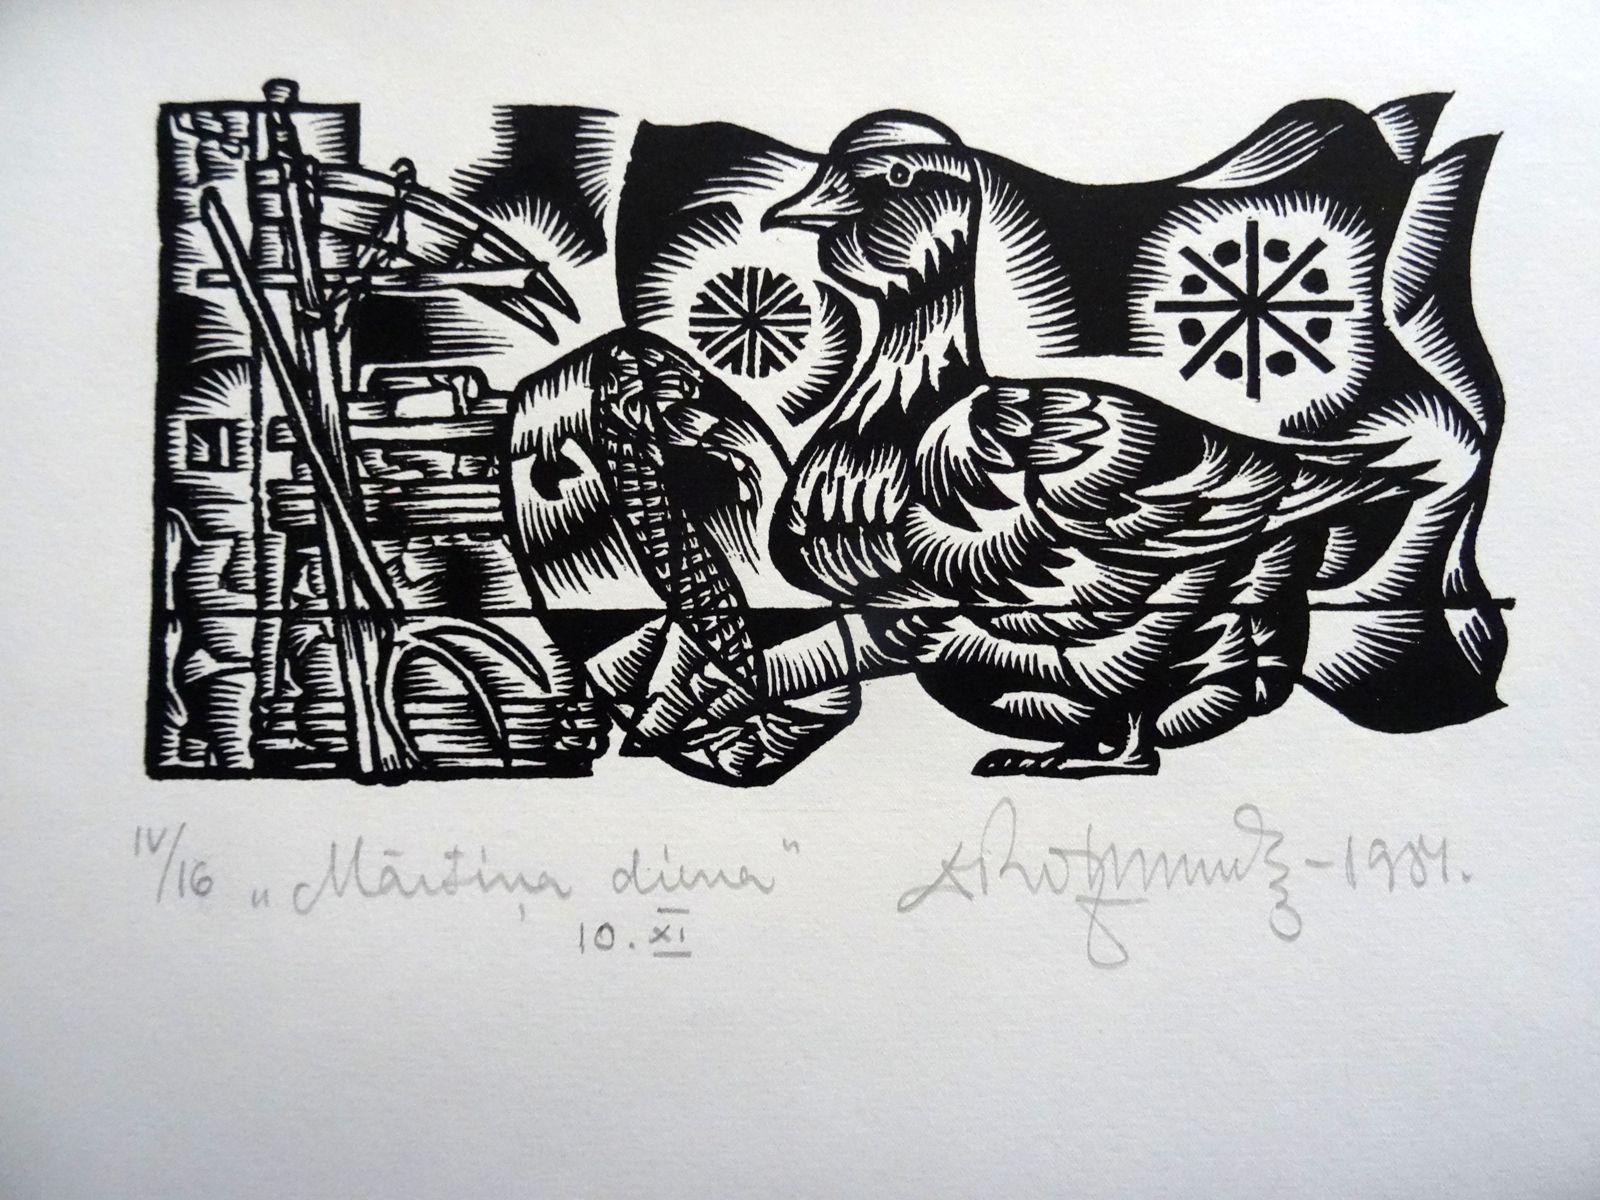 Martins day. 1984. Paper, linocut, 25x34 cm